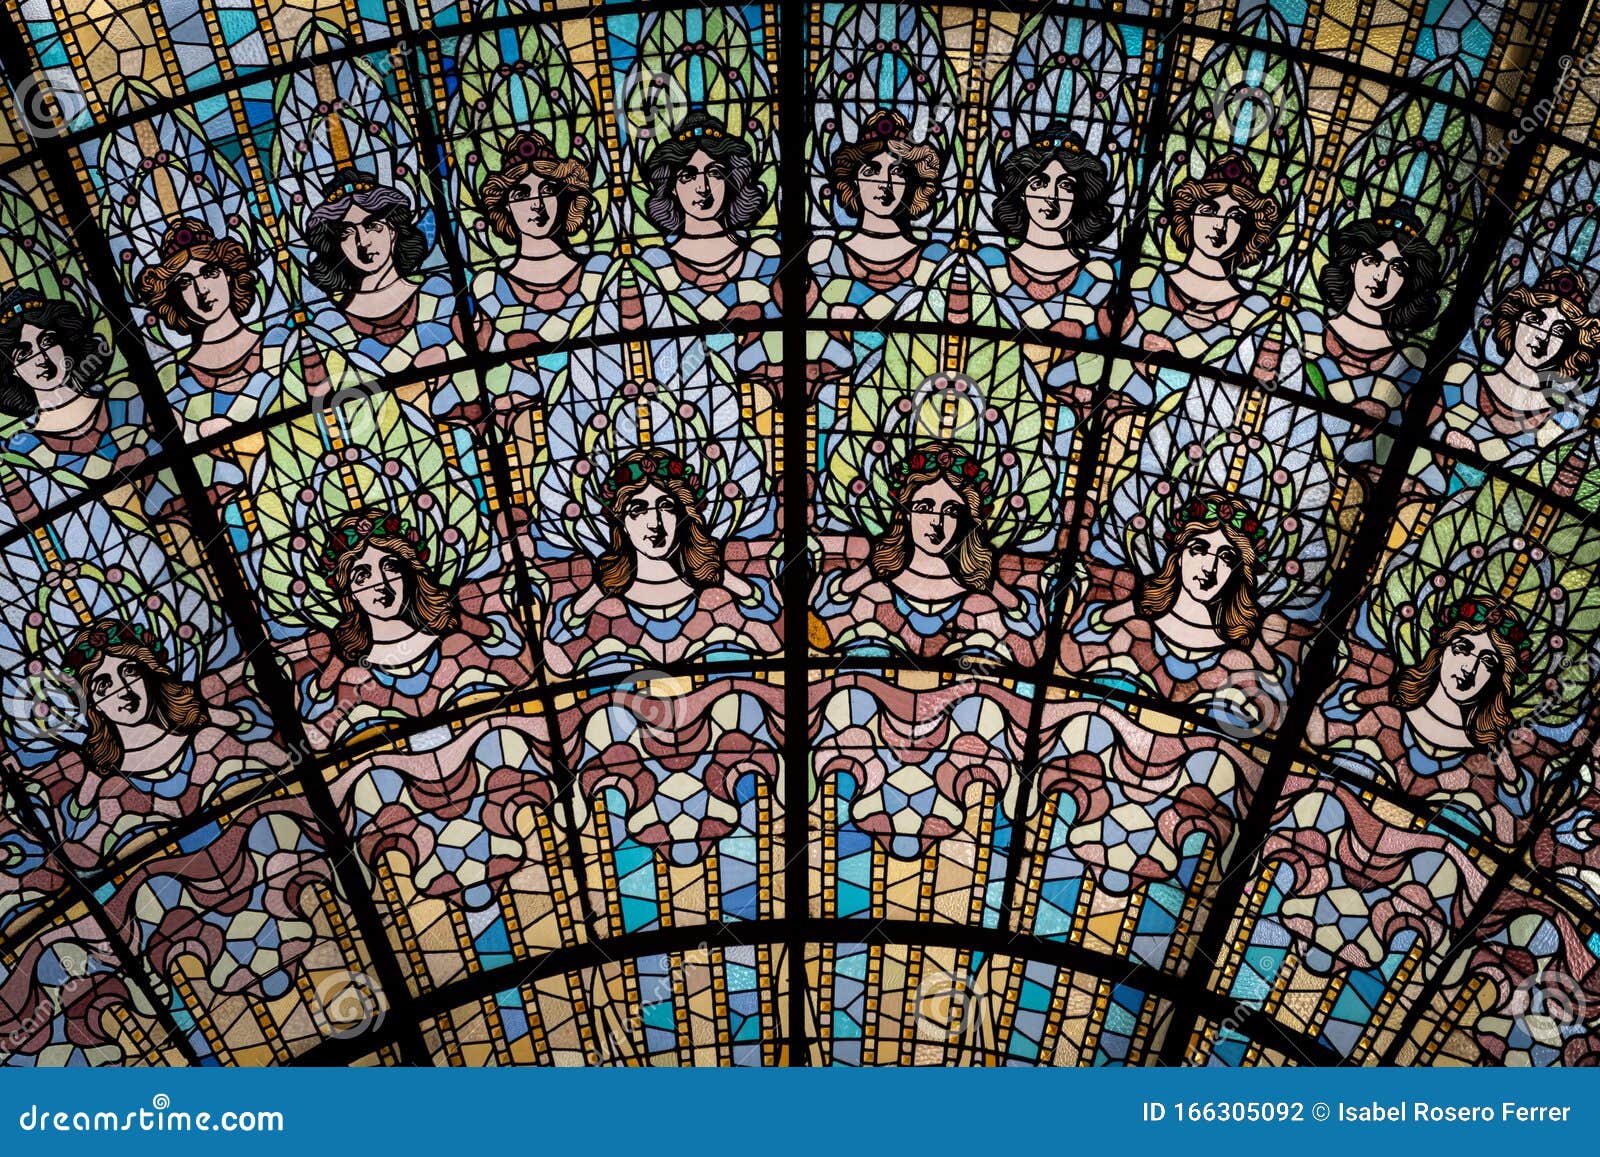 stained-glasss skylight detail. palau de la musica catalana, concert hall by lluis domenech i montaner. barcelona, catalonia.